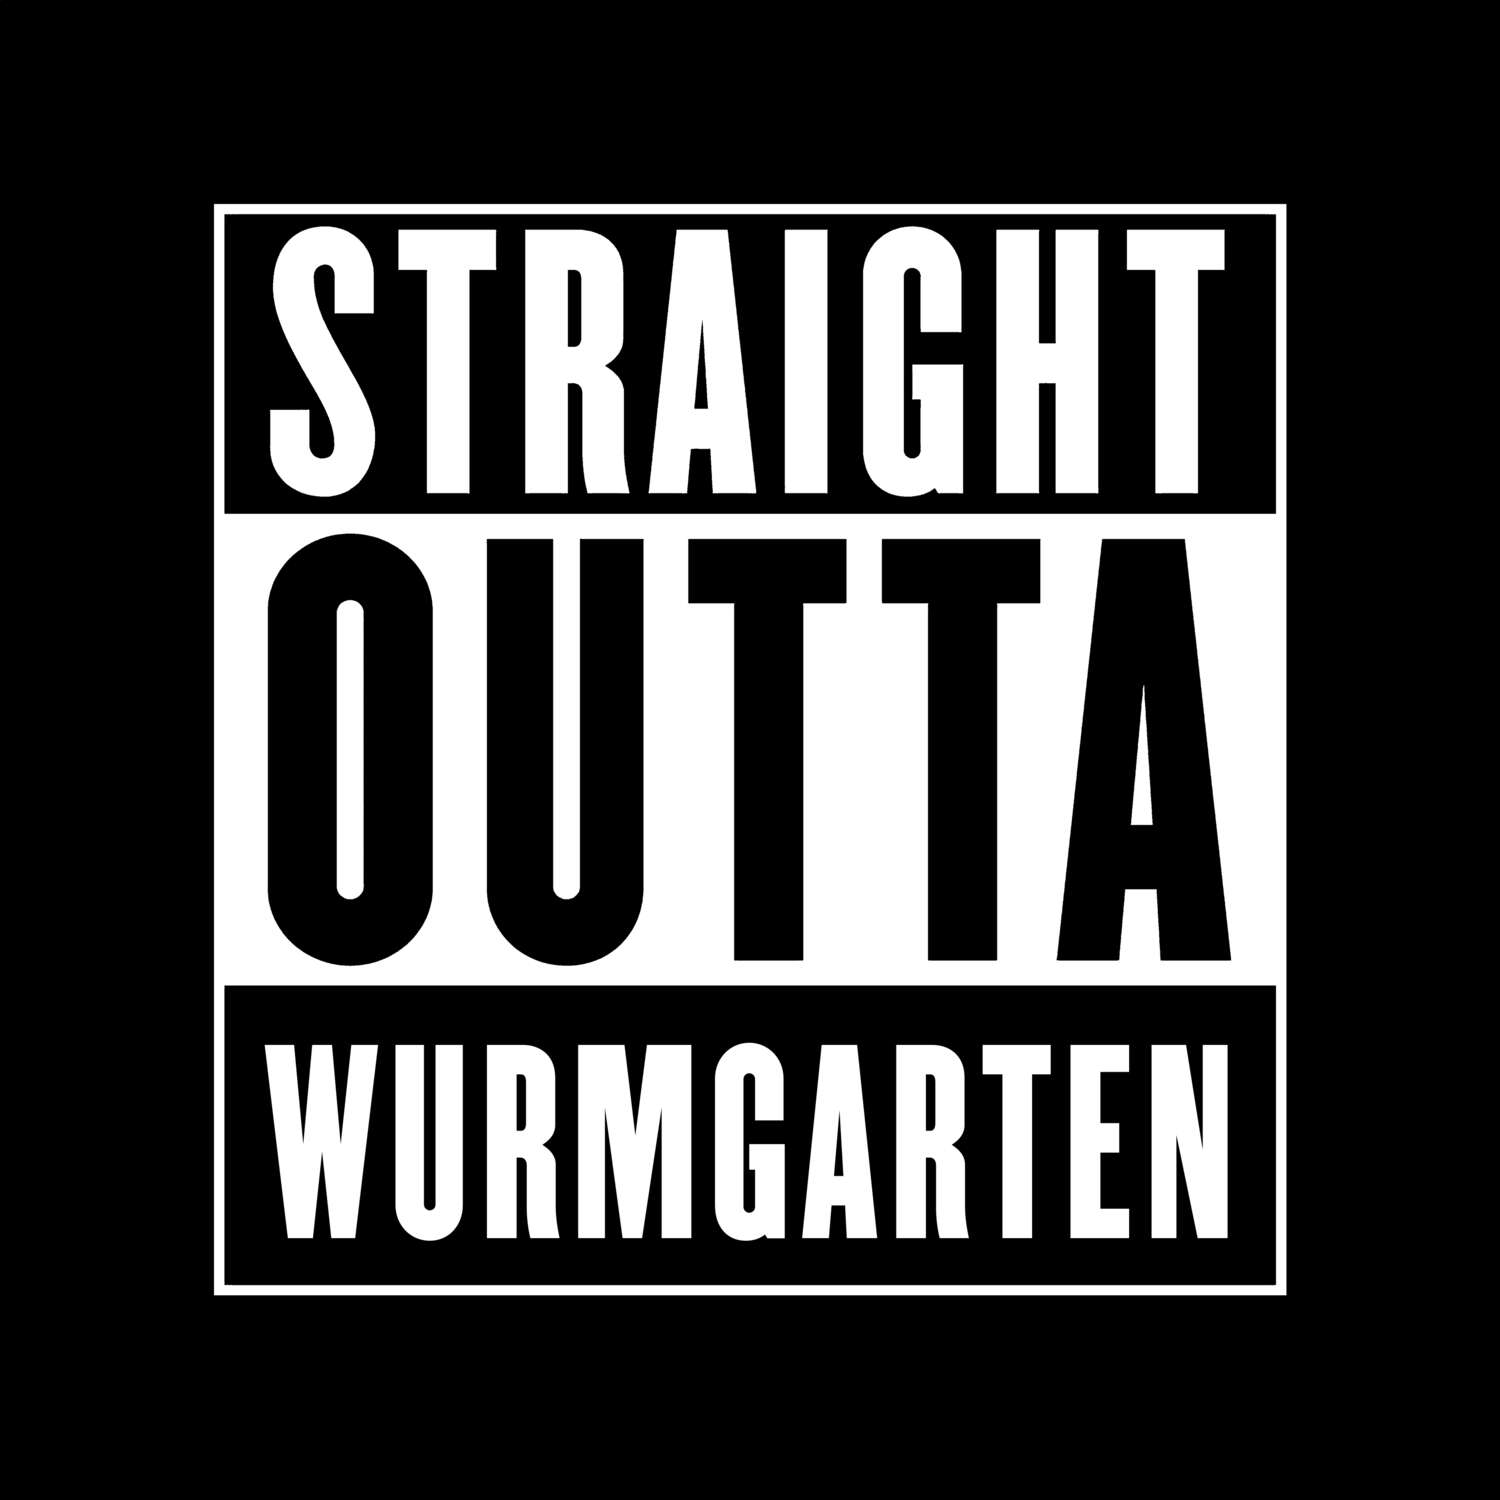 Wurmgarten T-Shirt »Straight Outta«